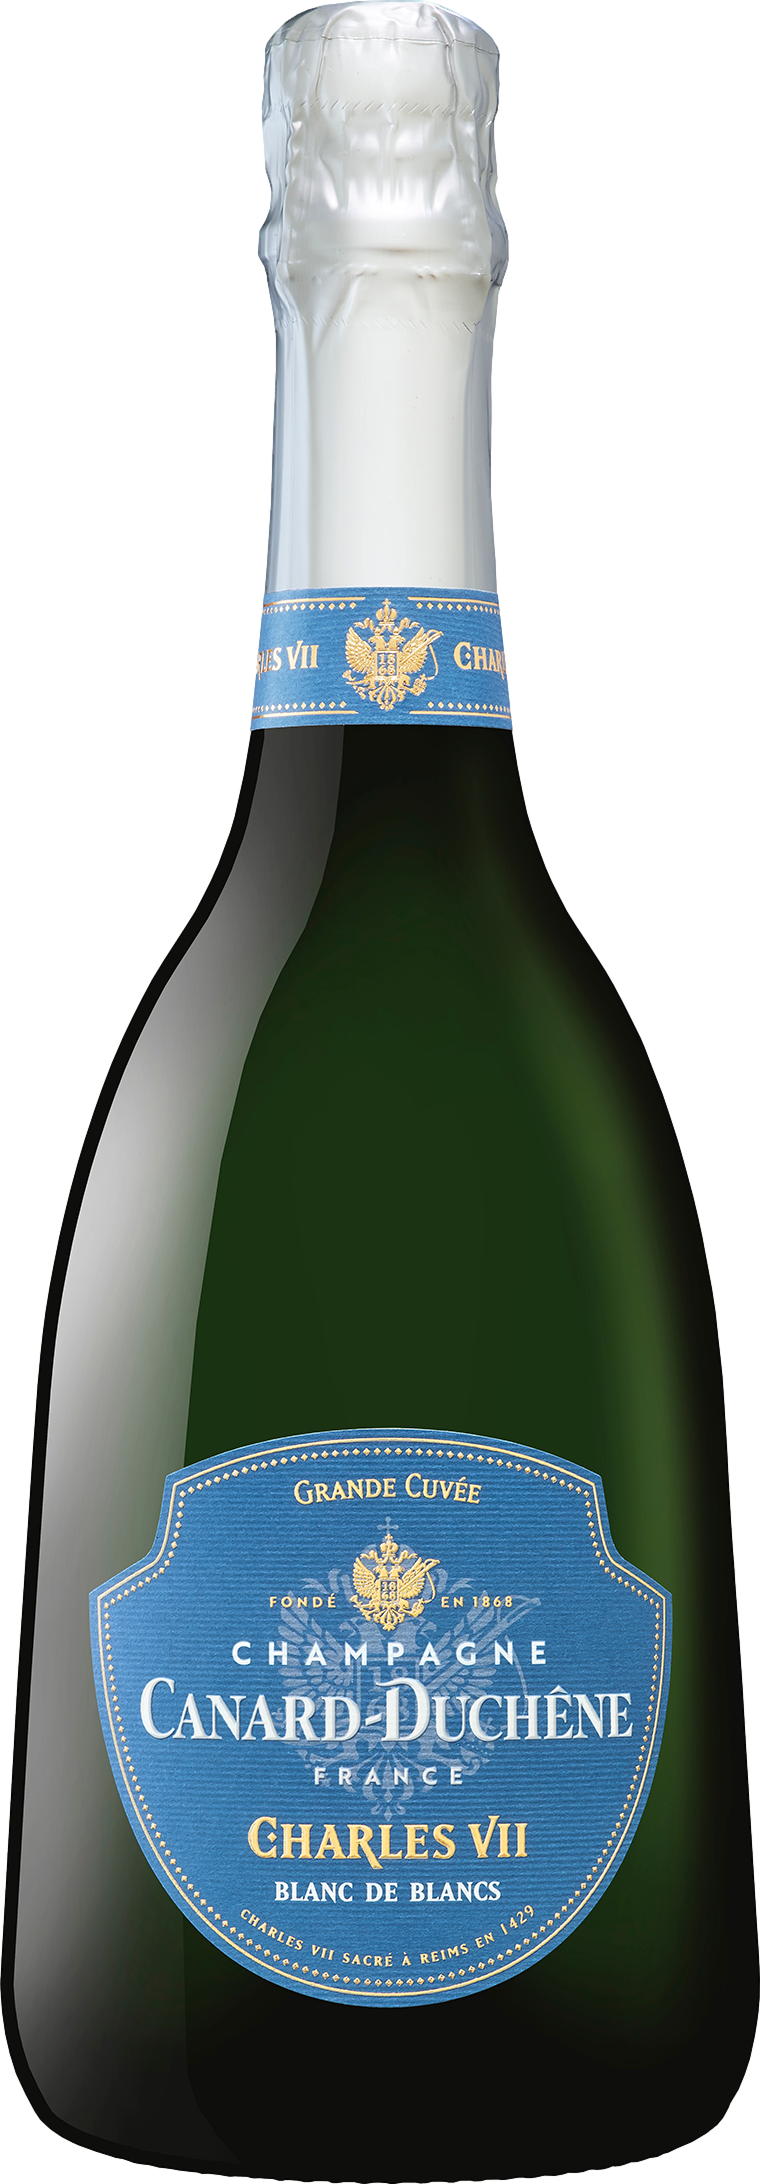 Champagne Canard-Duchene Grande Cuvee Charles VII Blanc de Blancs Šumivé 12.0% 0.75 l